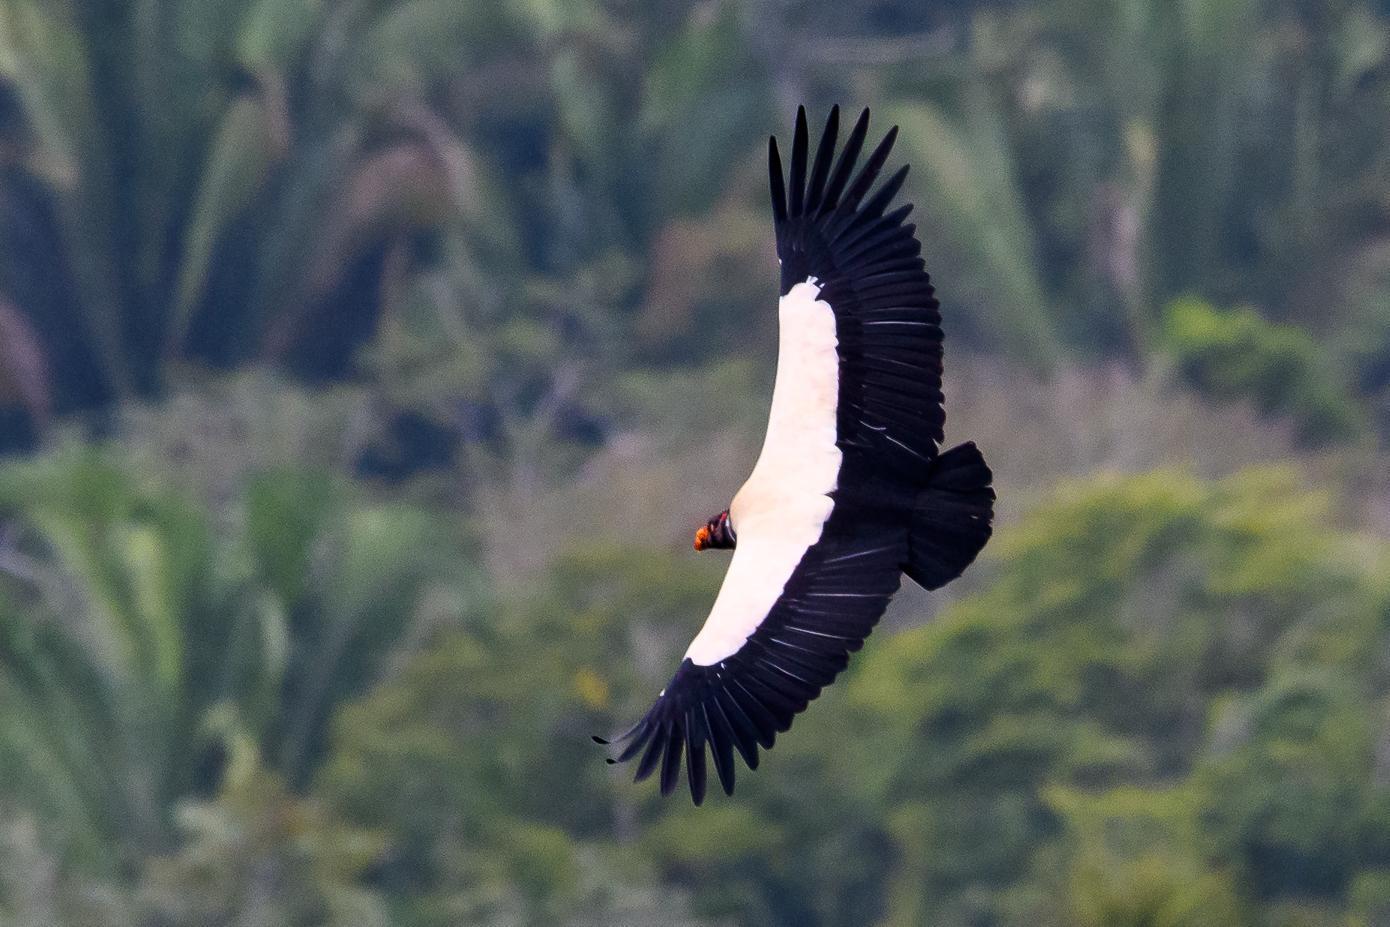 King Vulture Photo by Gerald Hoekstra